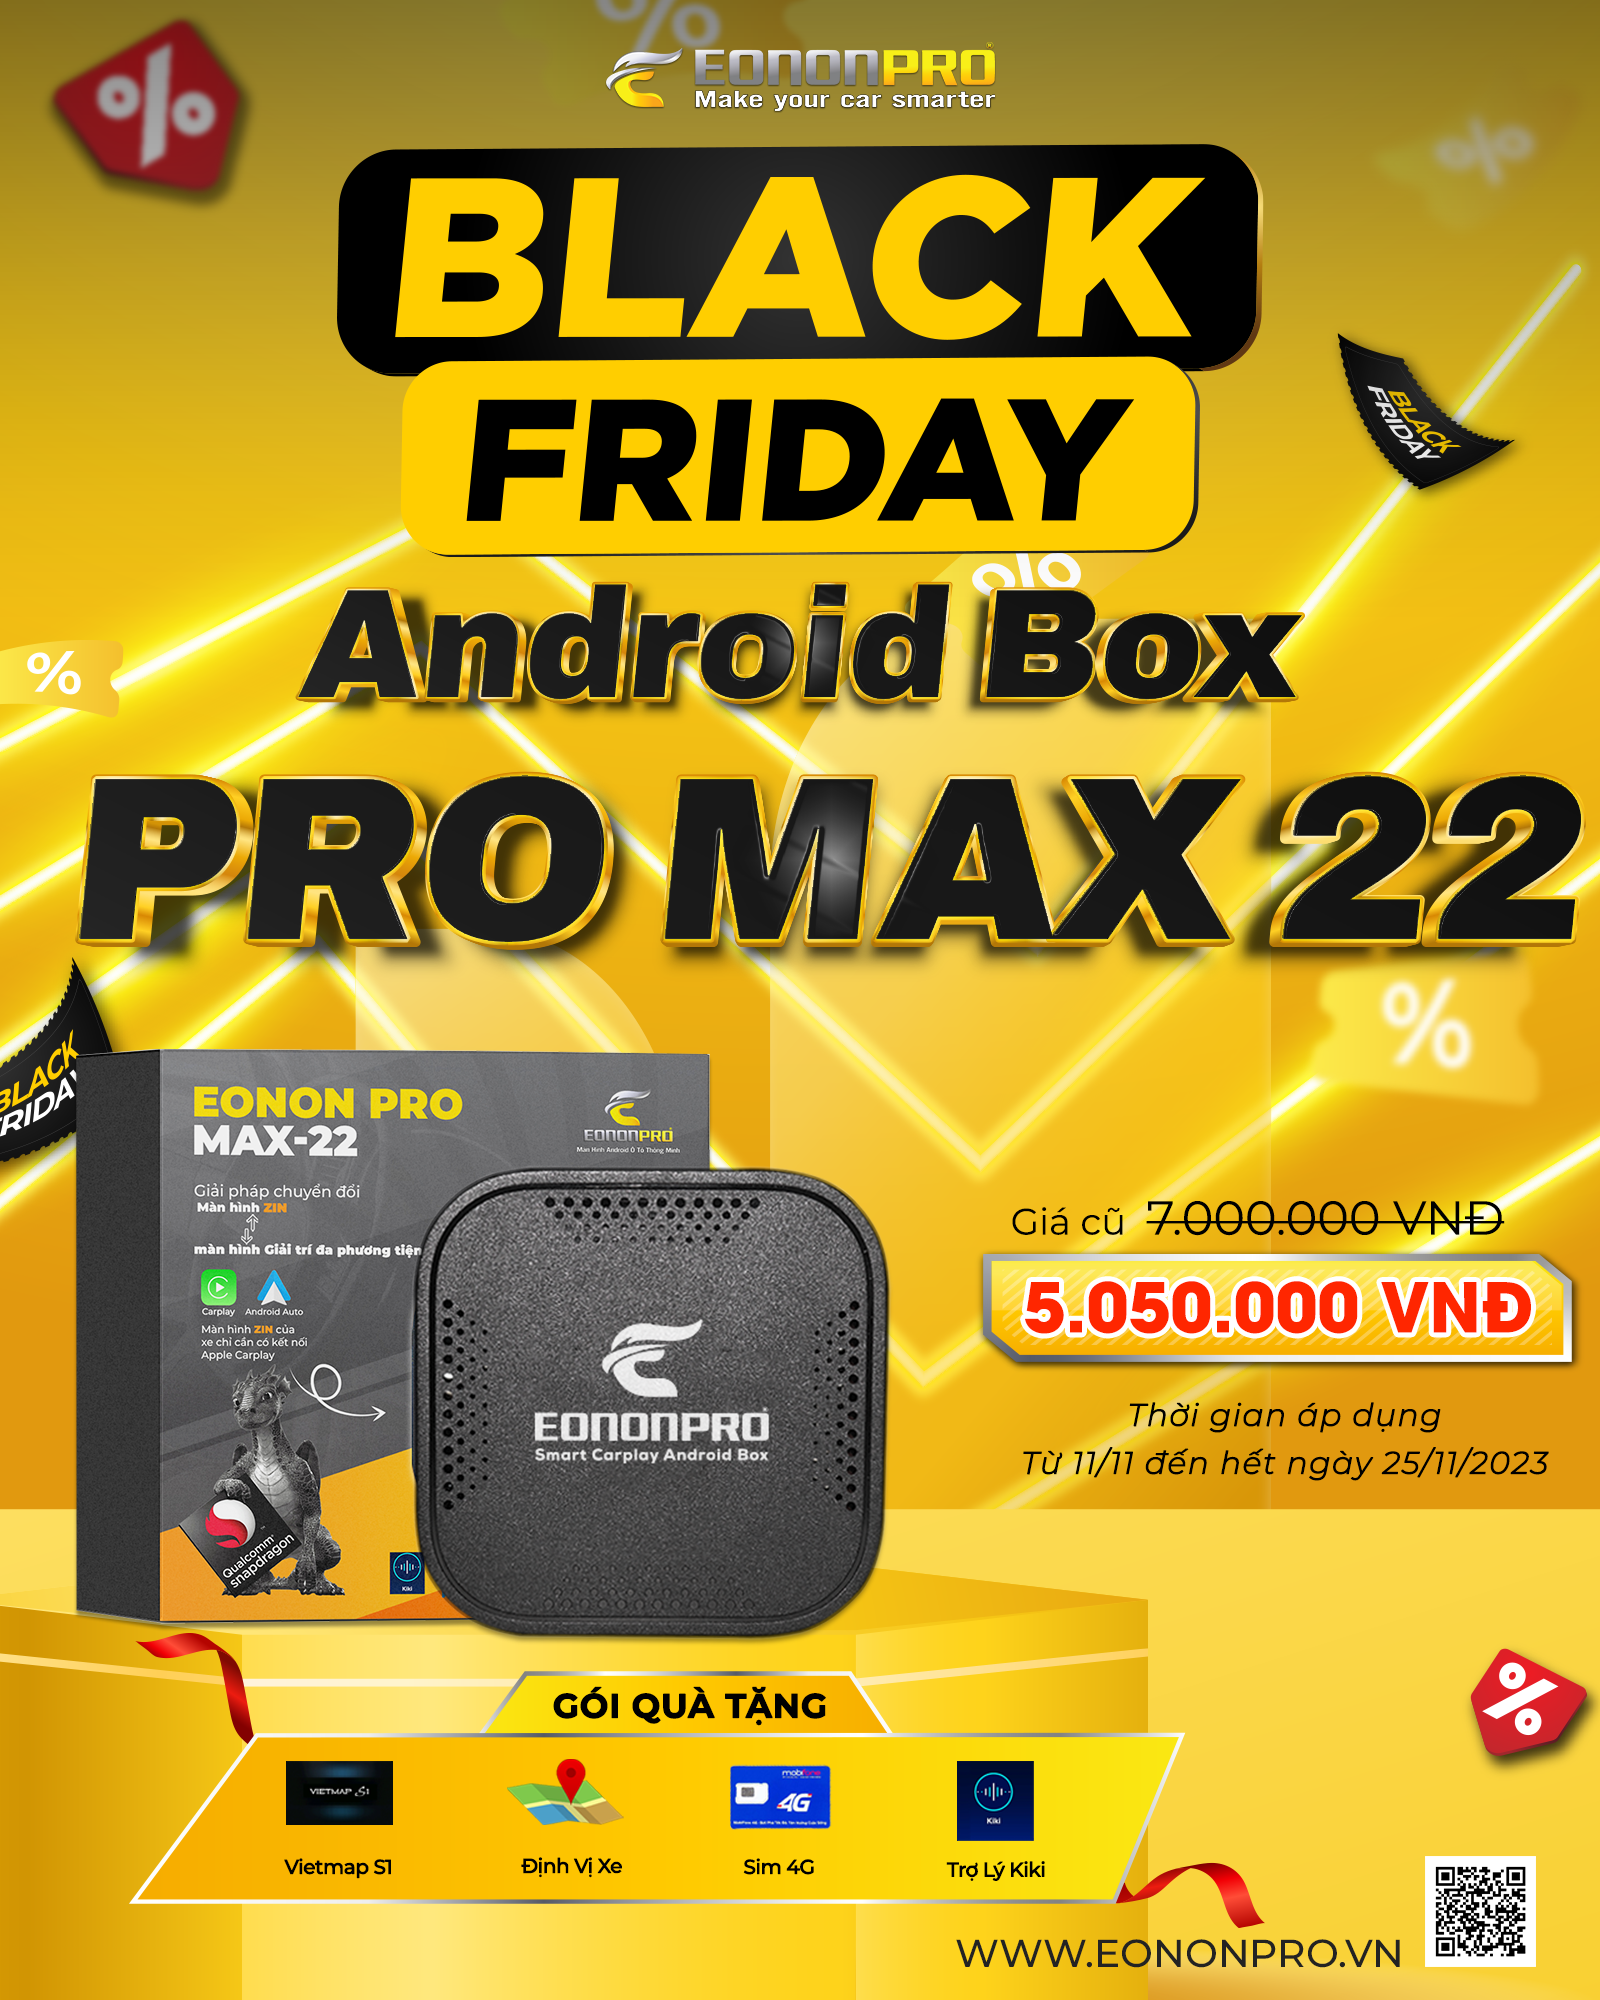 Android Box Pro Max 22